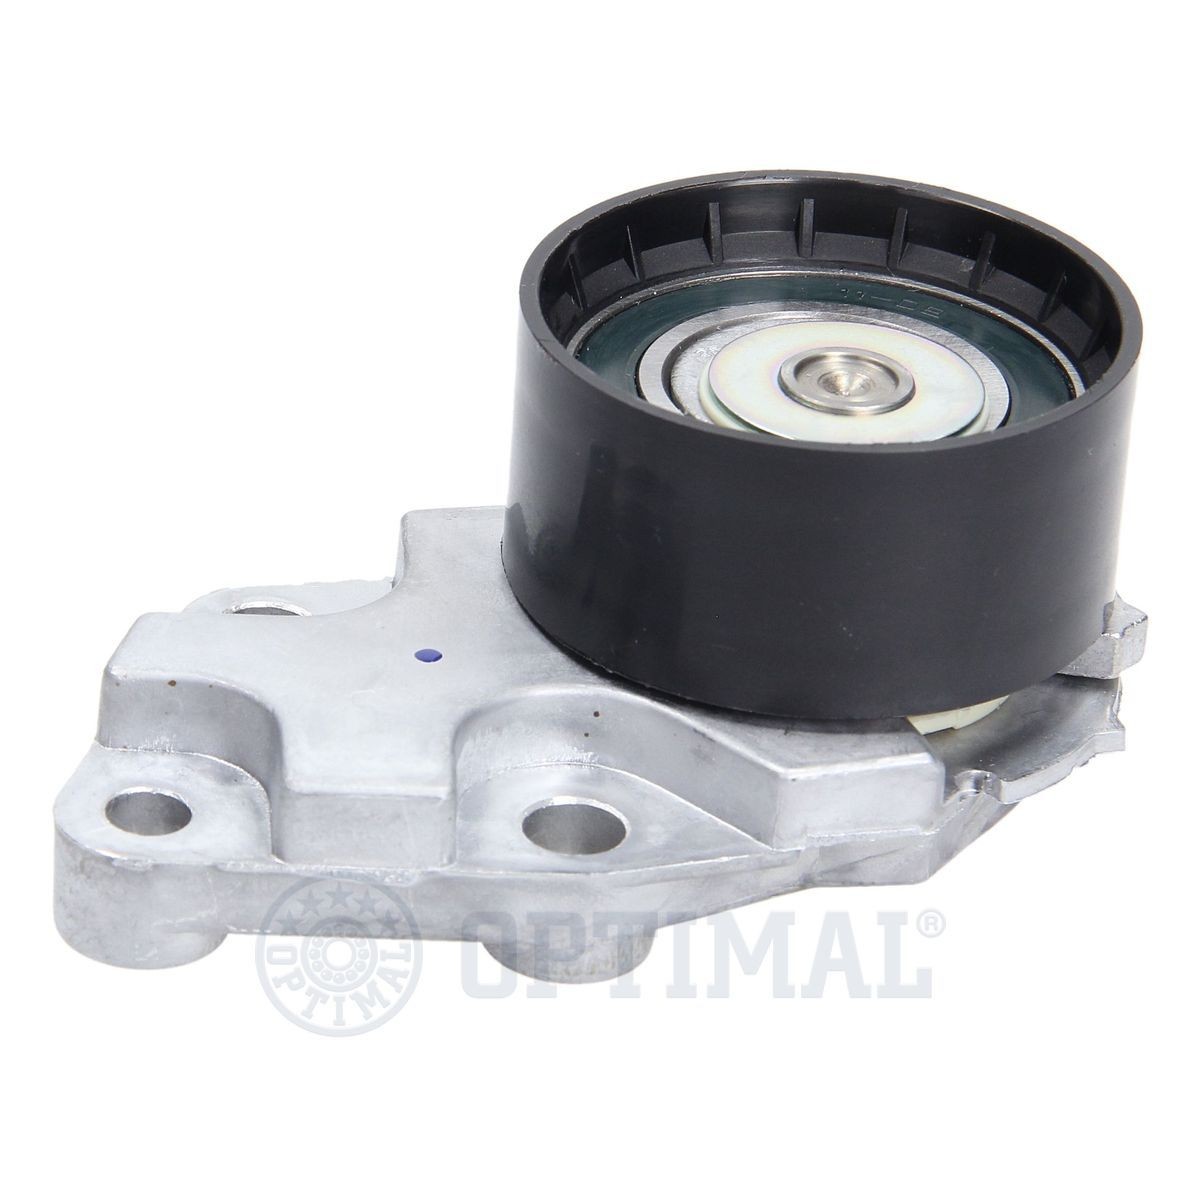 OPTIMAL 0-N970 Timing belt tensioner pulley with holder